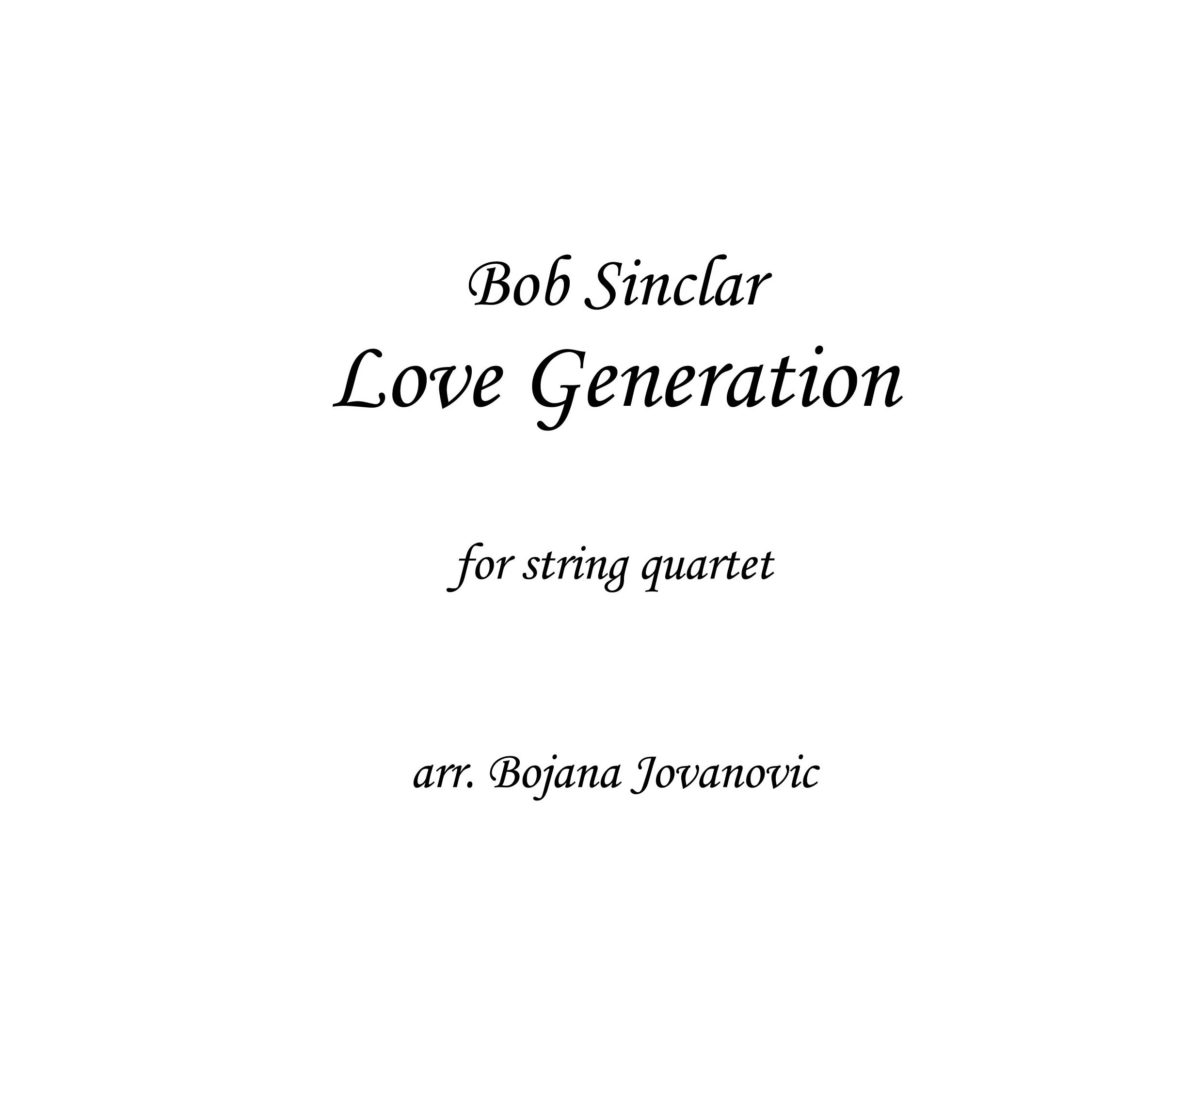 Love Generation (Bob Sinclar) - Sheet Music